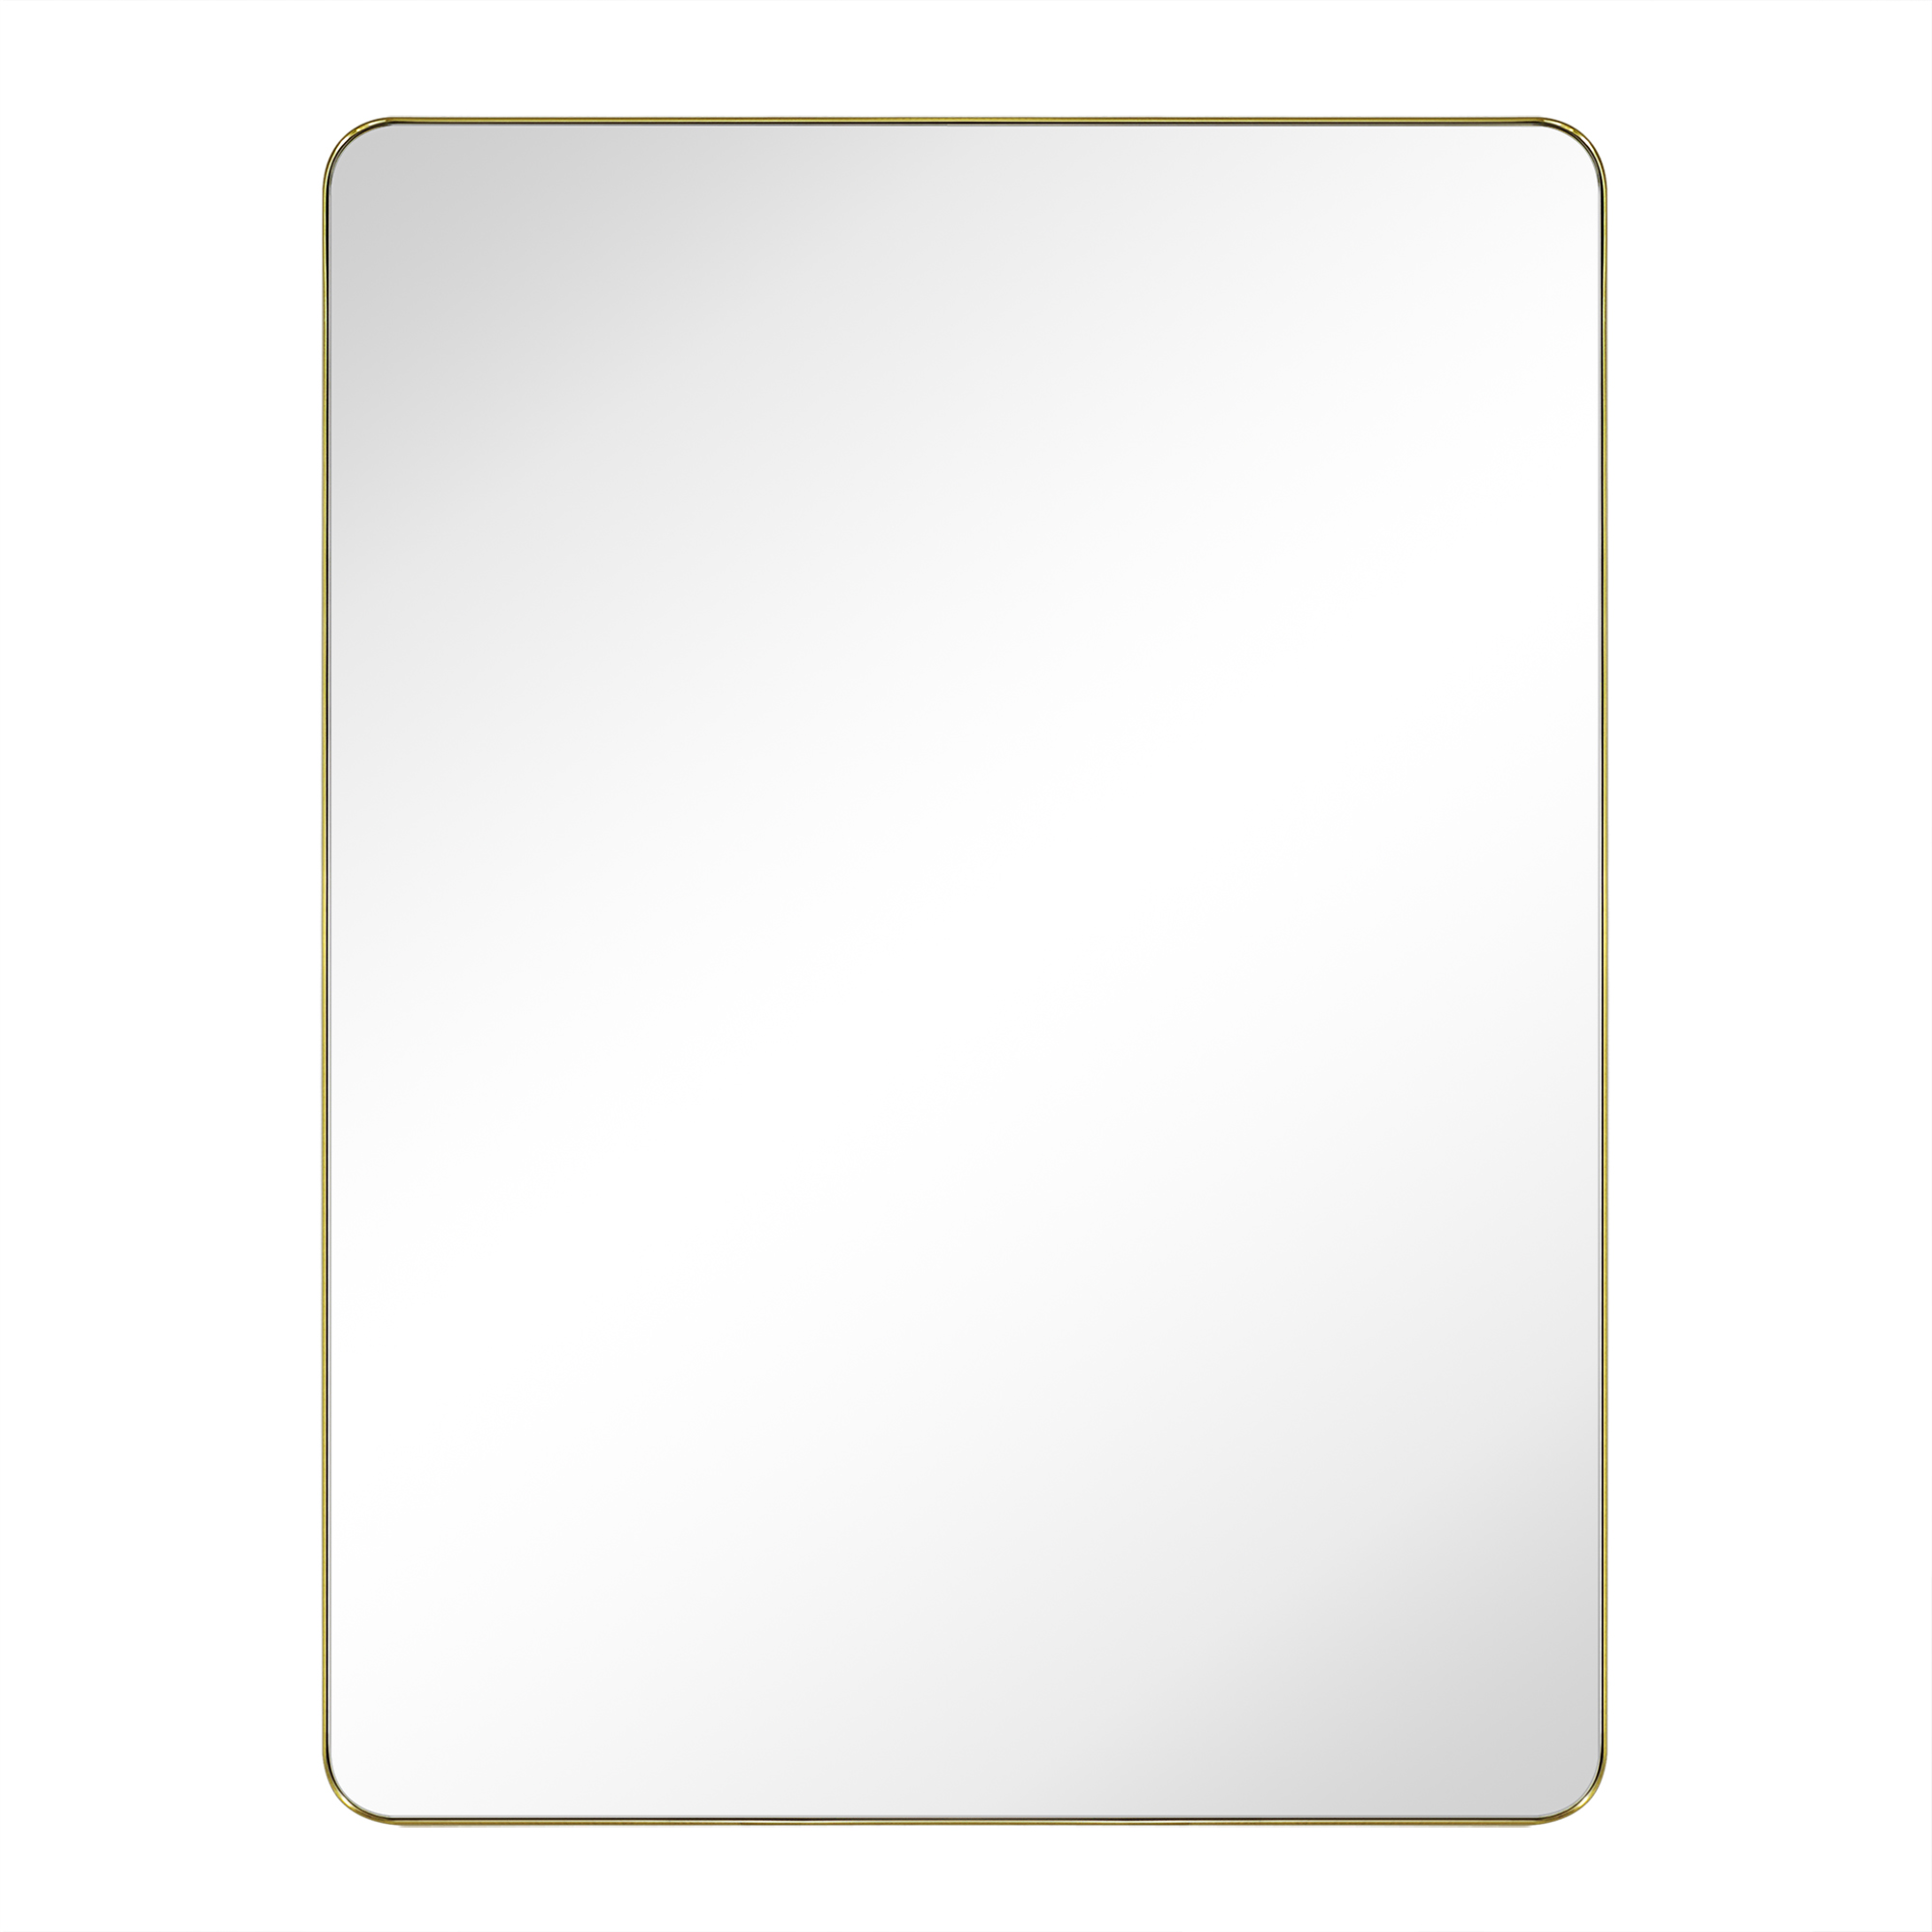 Kengston Modern & Contemporary Rectangular Bathroom Vanity Mirrors-36x48-Brushed Gold